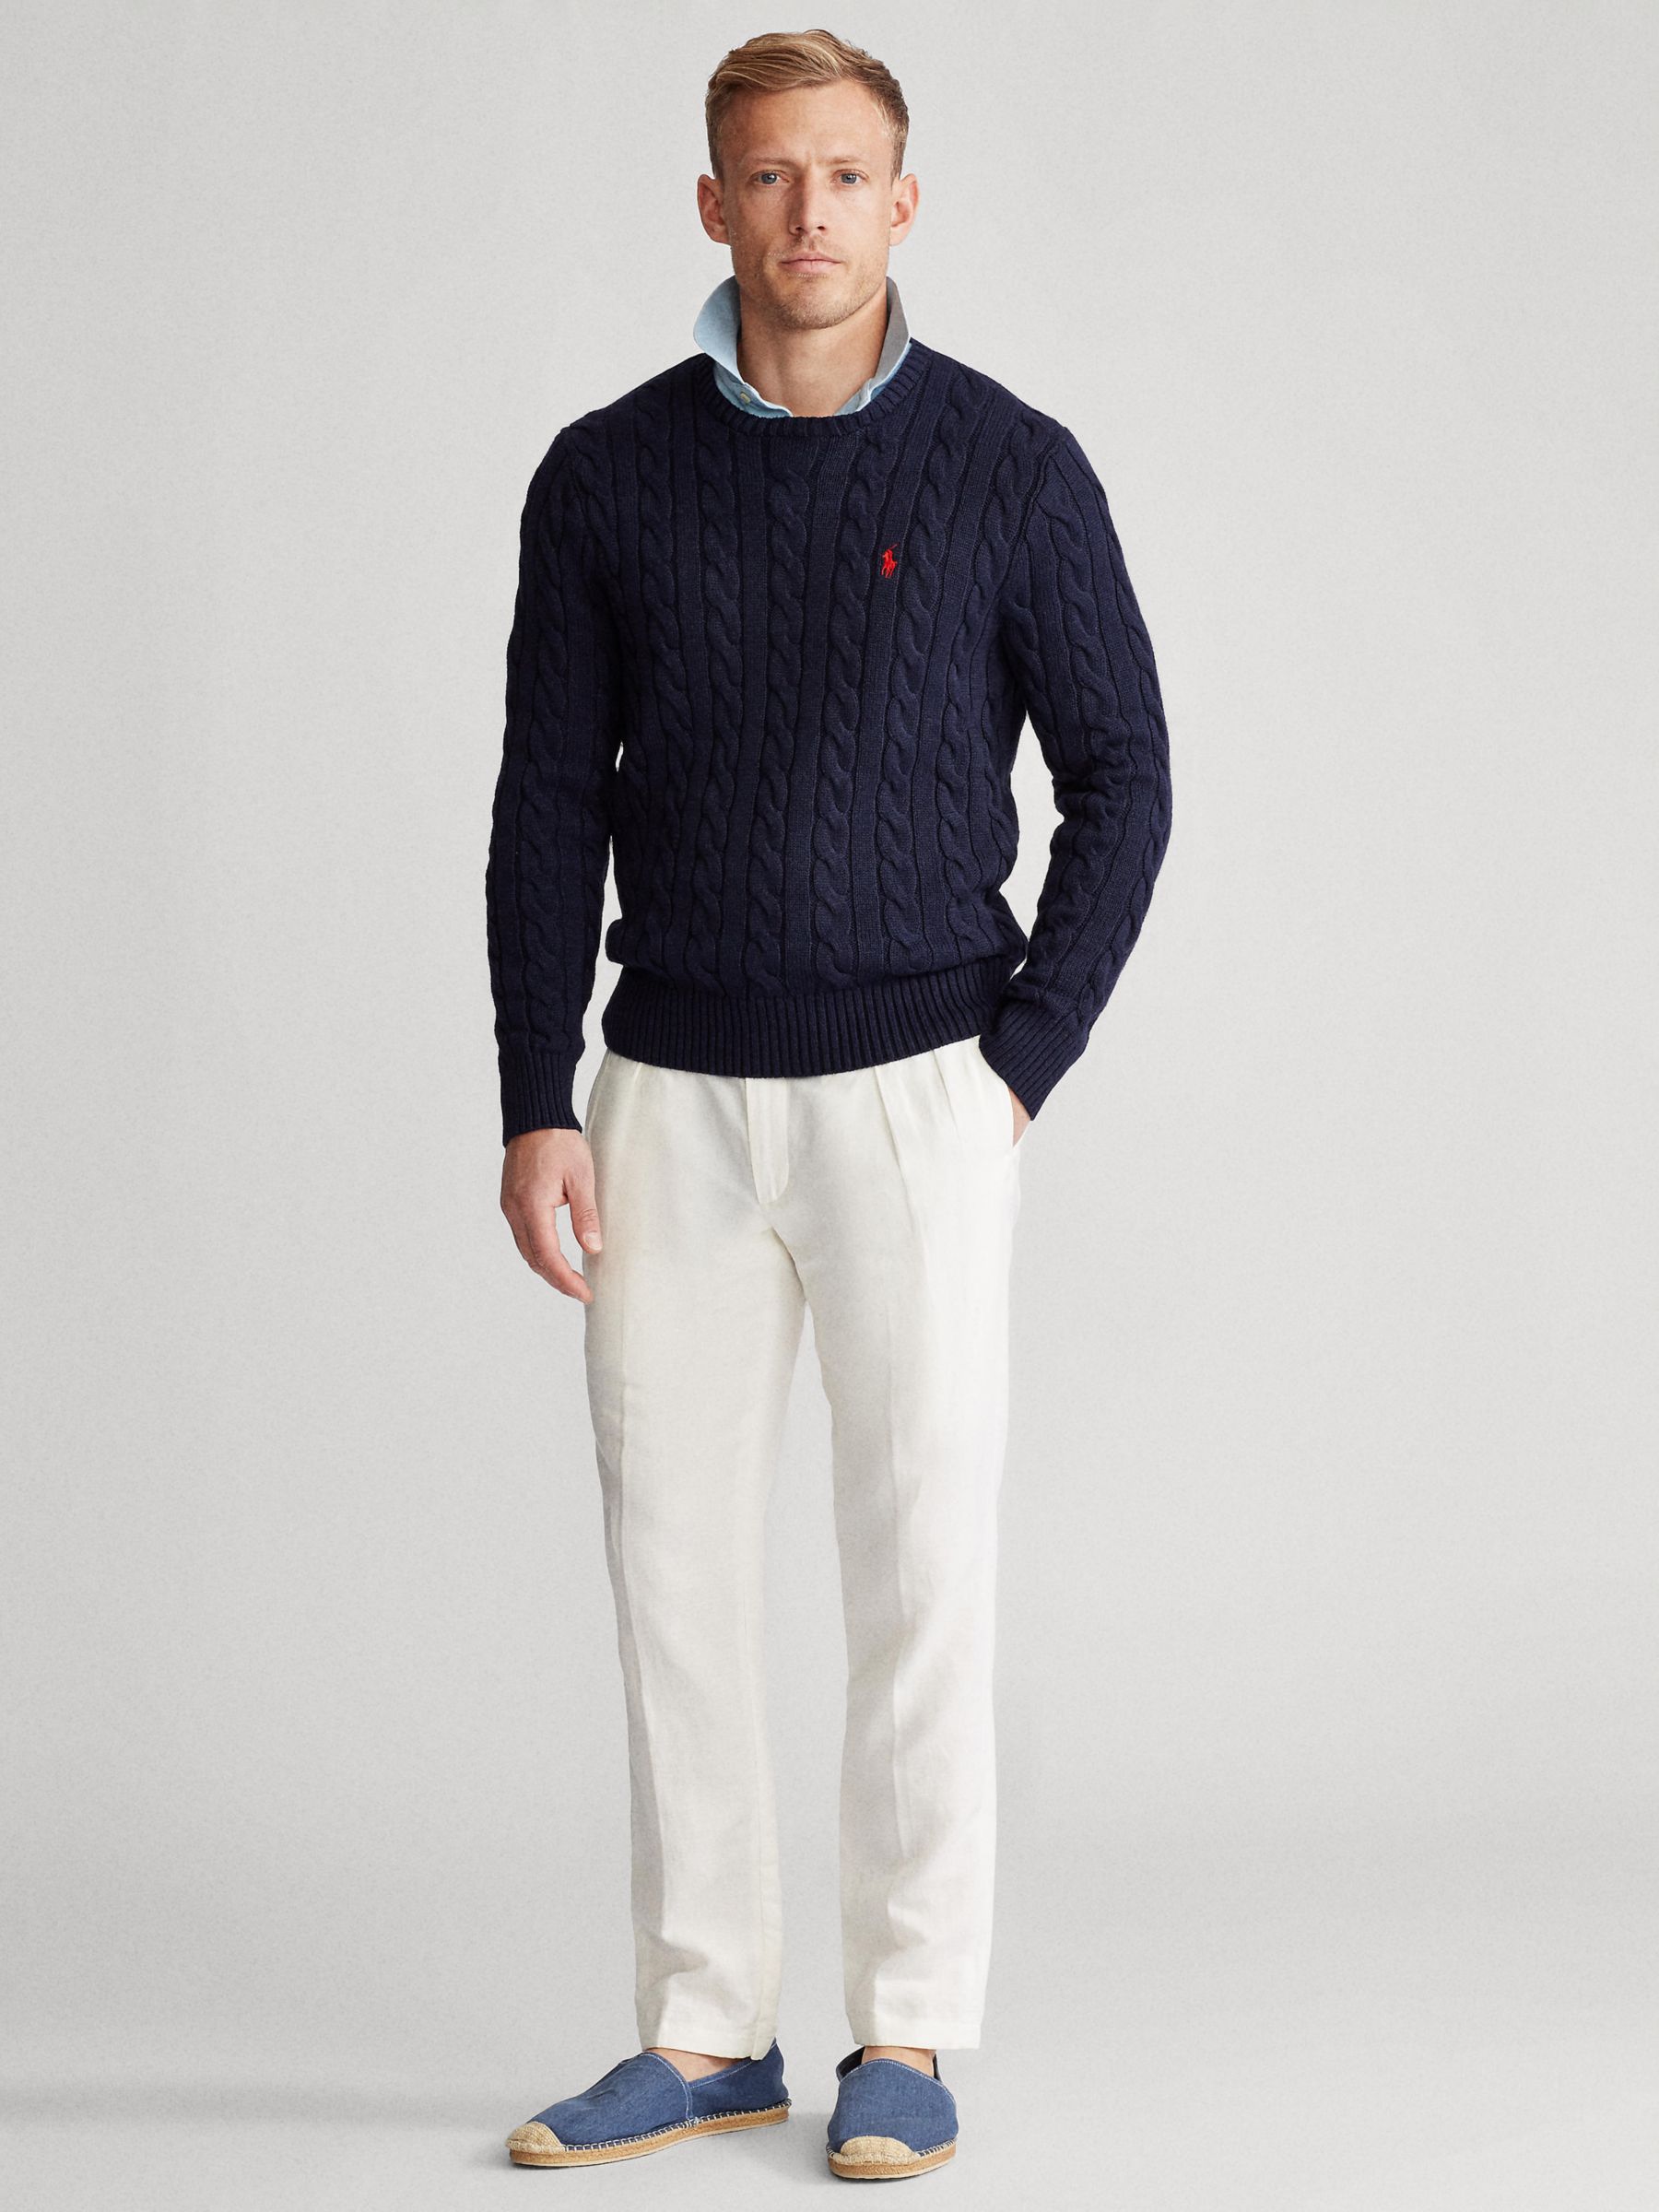 Polo Ralph Lauren  Big & Tall Cable Knit Cotton Jumper, Hunter Navy, 2XB